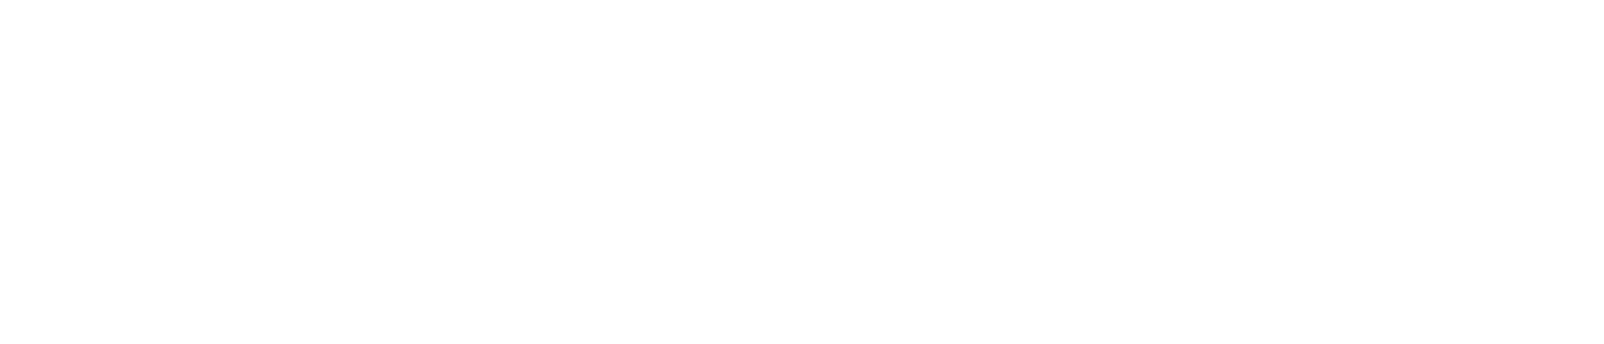 teknolove-logo